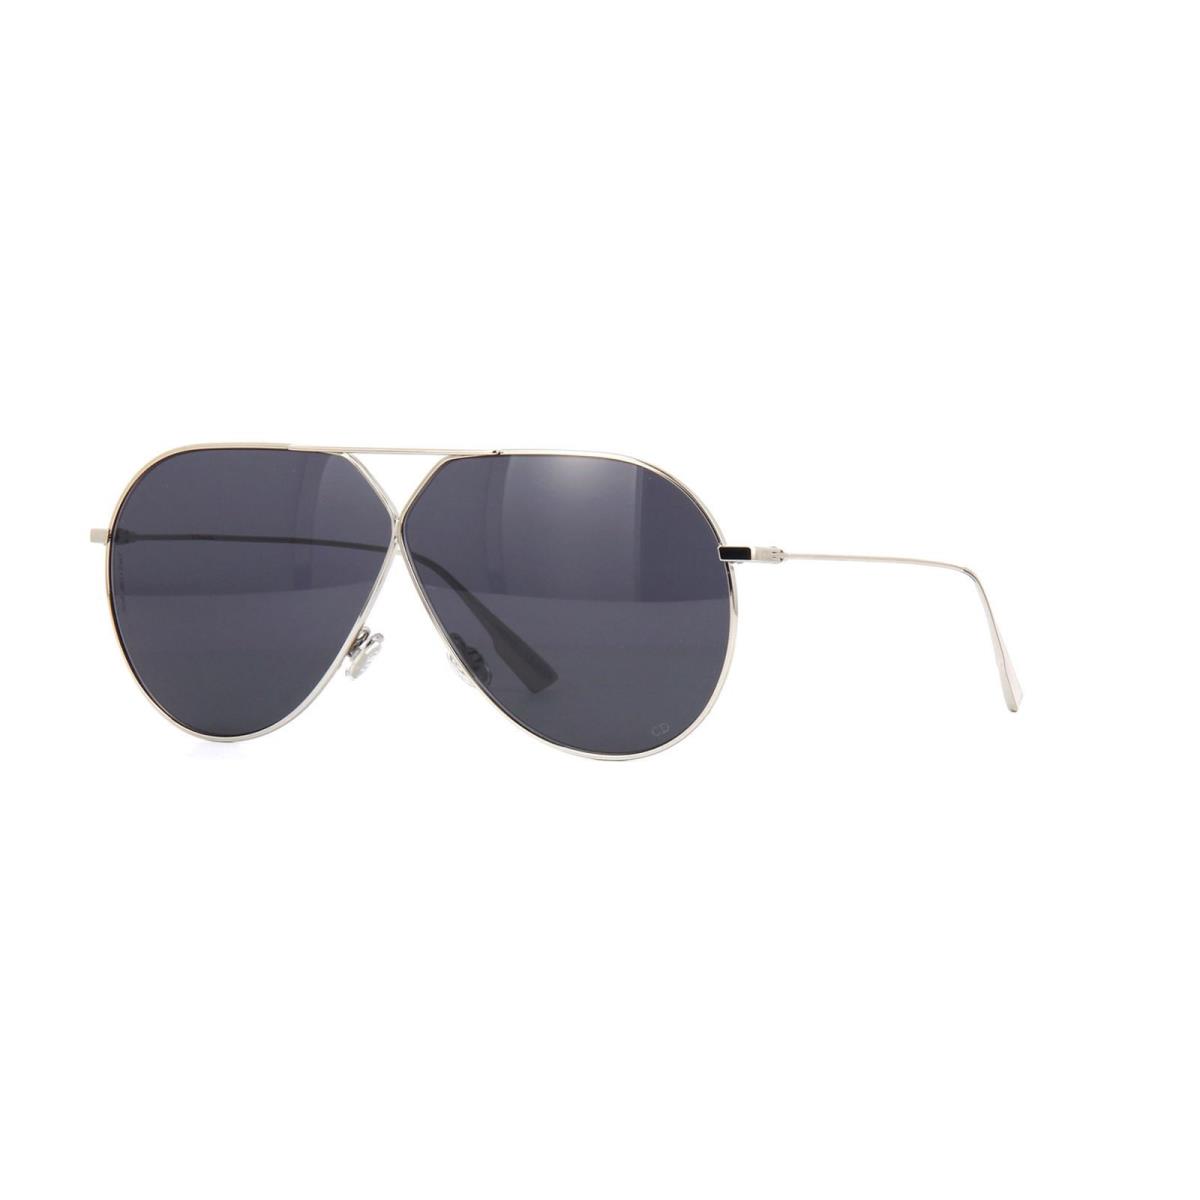 Christian Dior Stellaire 3 3YGIR Light Gold Polarized Sunglasses - Light Gold Frame, Grey Blue Lens